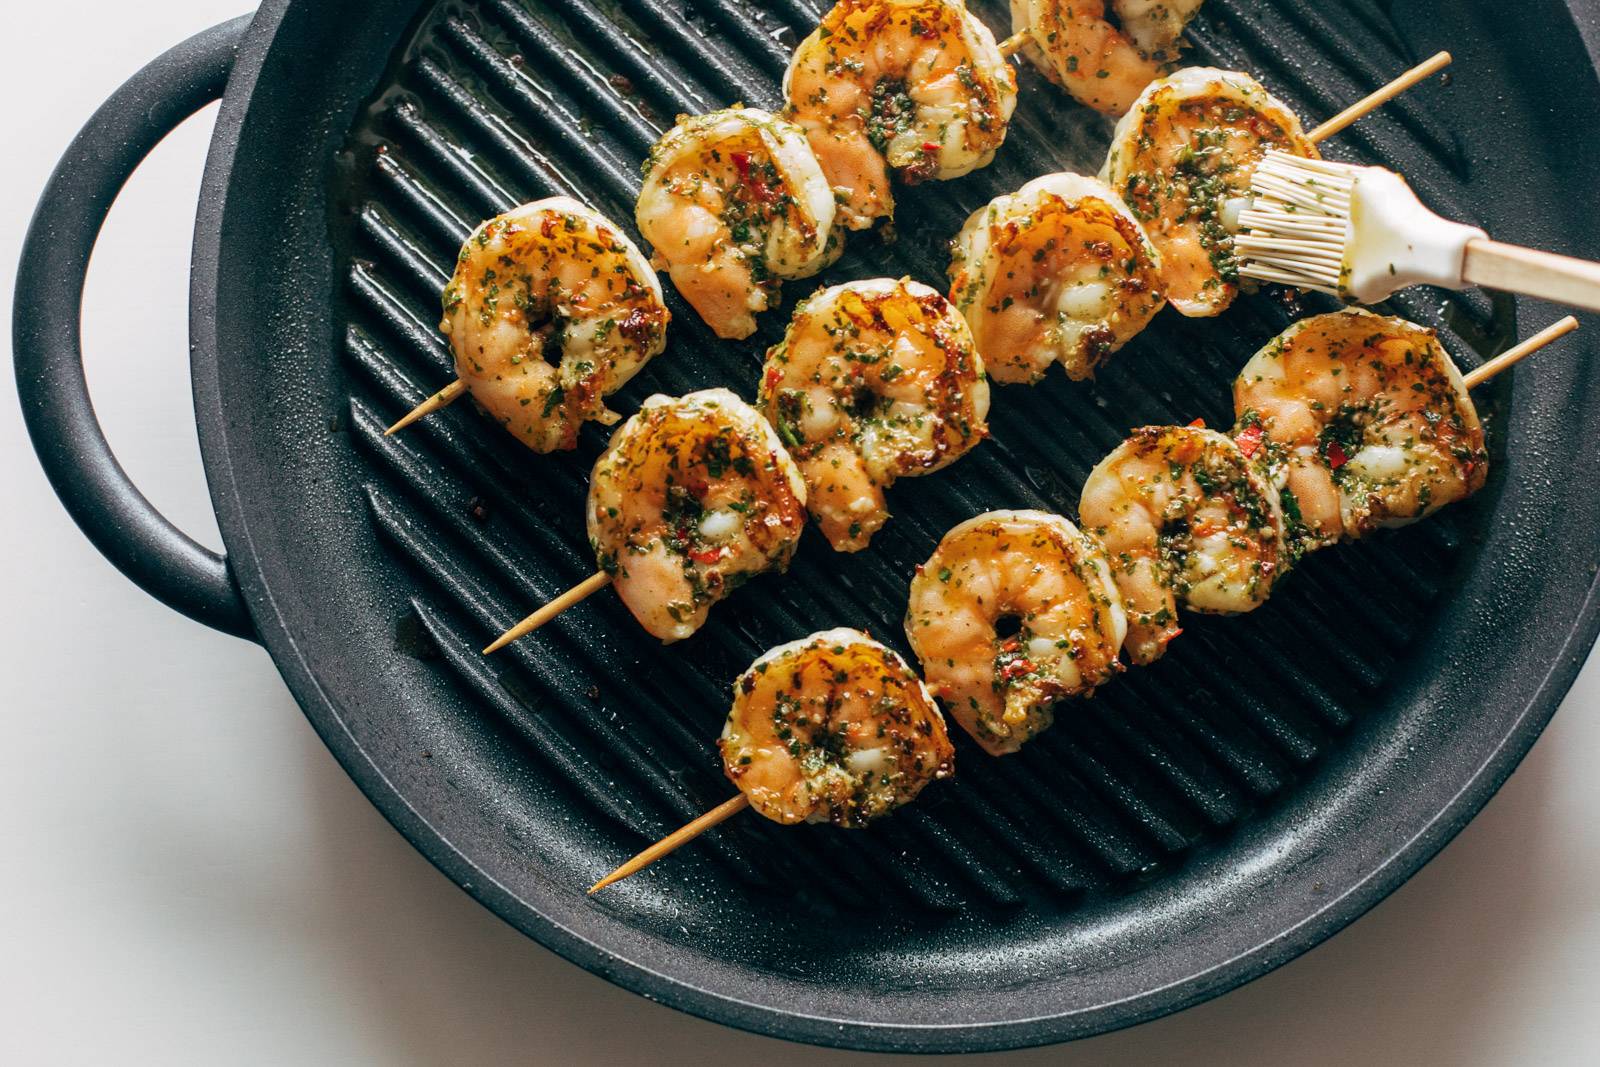 Grilling shrimp while brushing on chimichurri sauce,